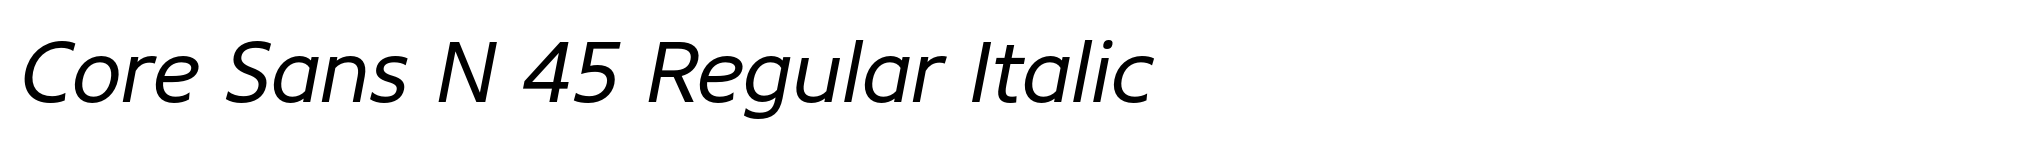 Core Sans N 45 Regular Italic image